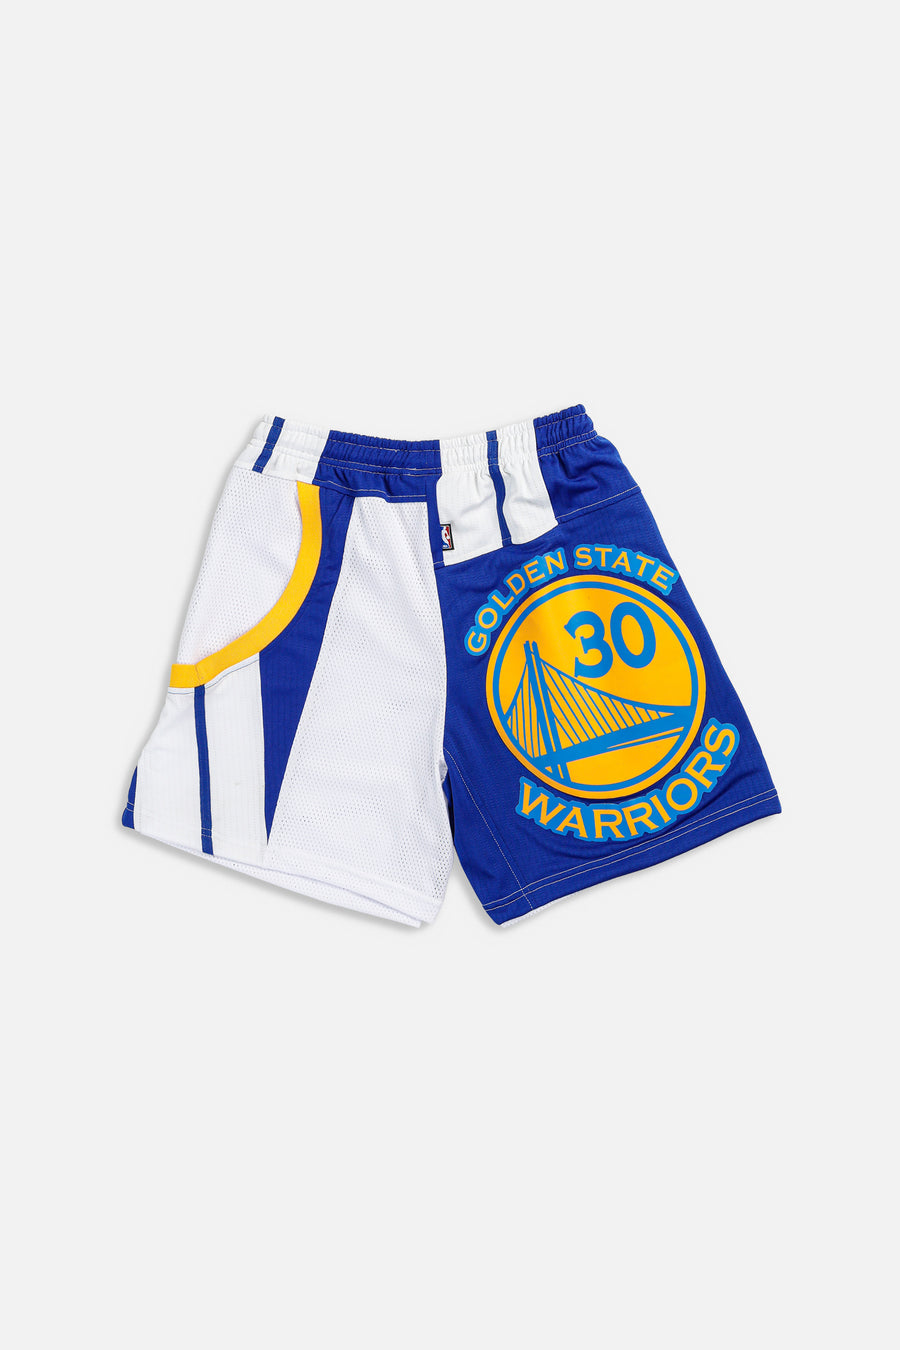 Unisex Rework Golden State Warriors NBA Jersey Shorts - M